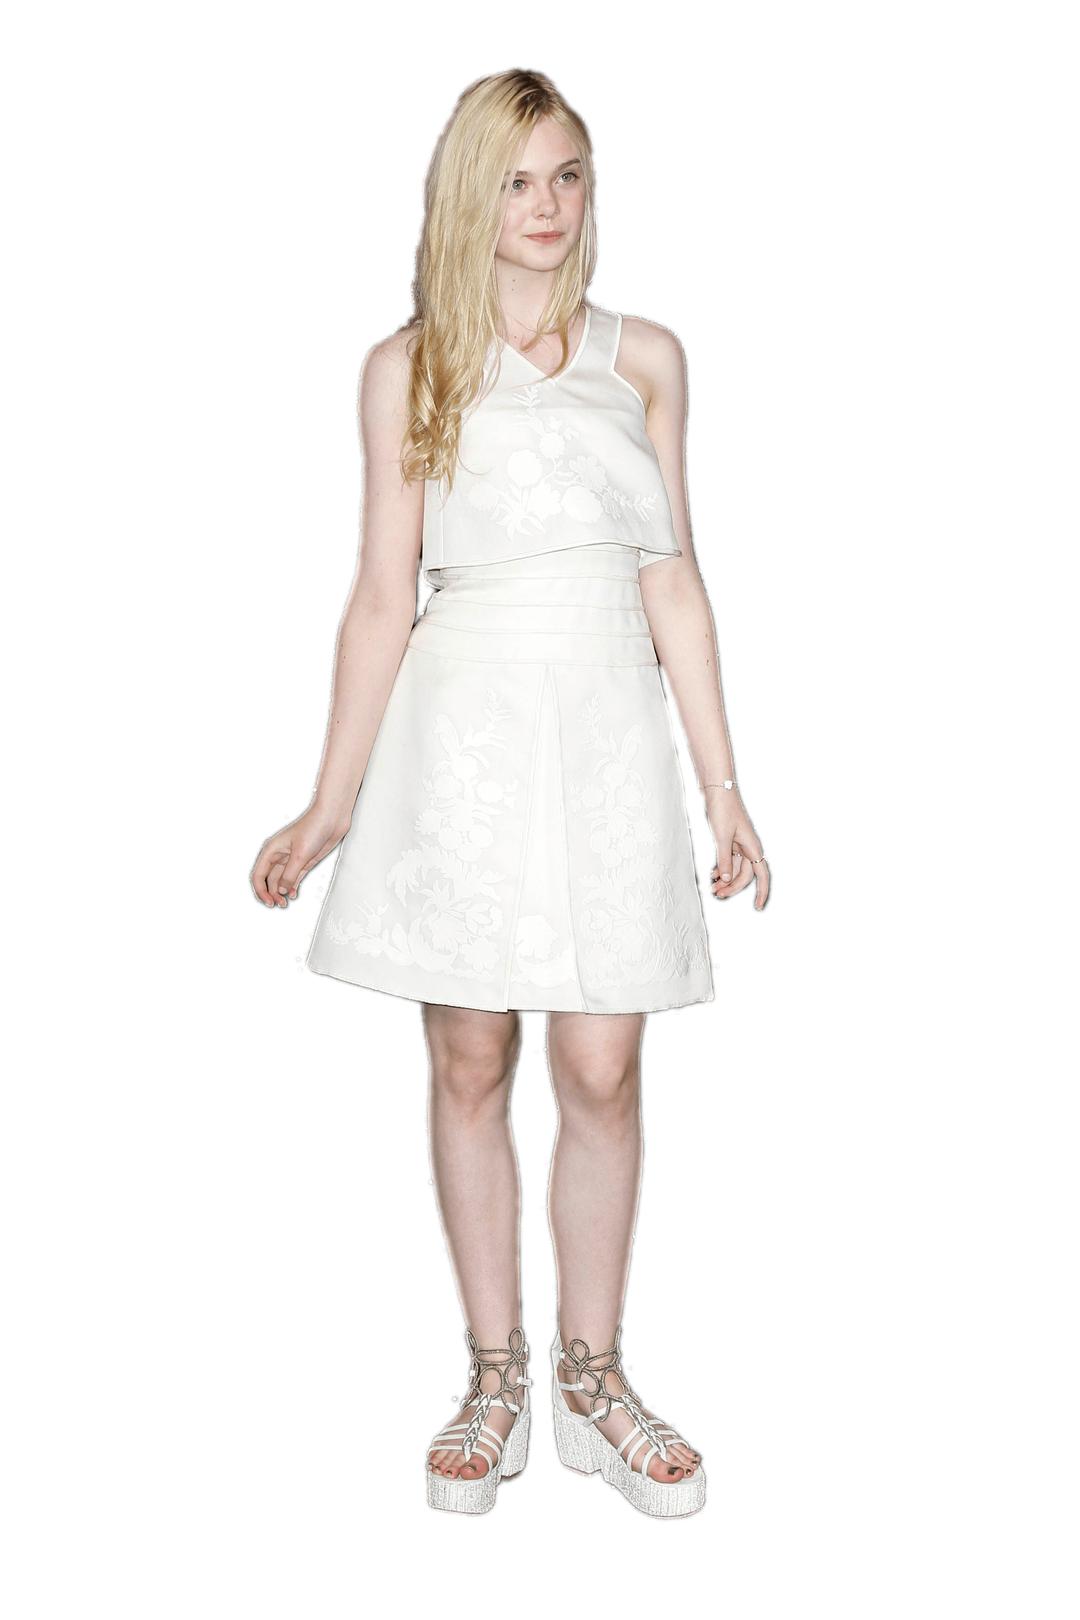 Elle Fanning White Dress png transparent